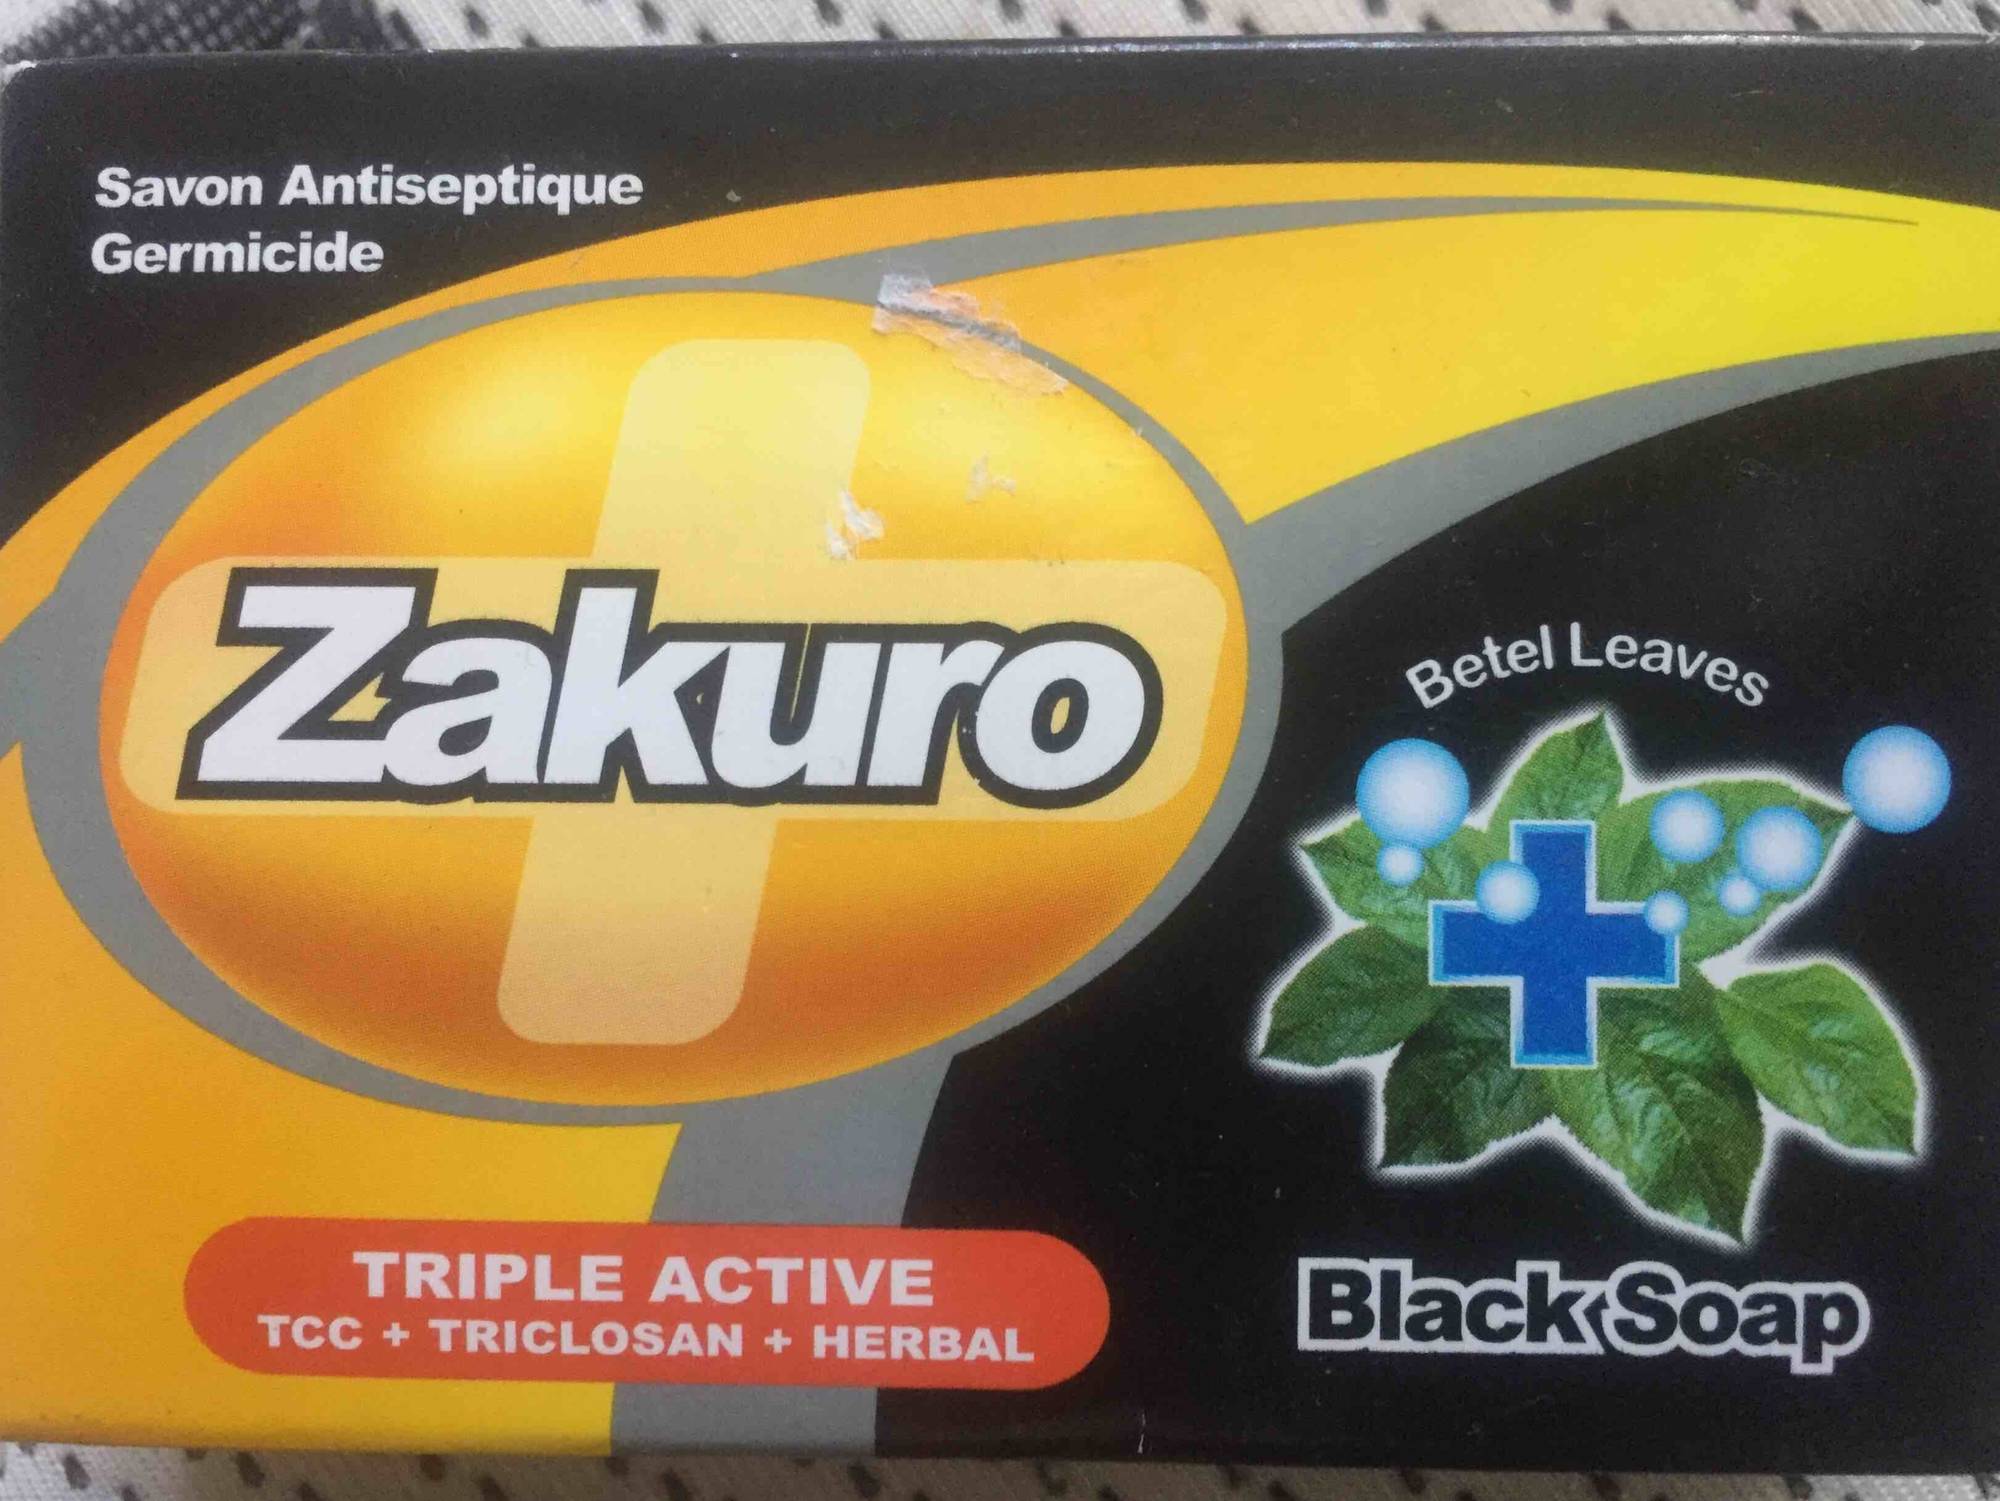 ZAKURO - Triple active - Savon antiseptique germicide